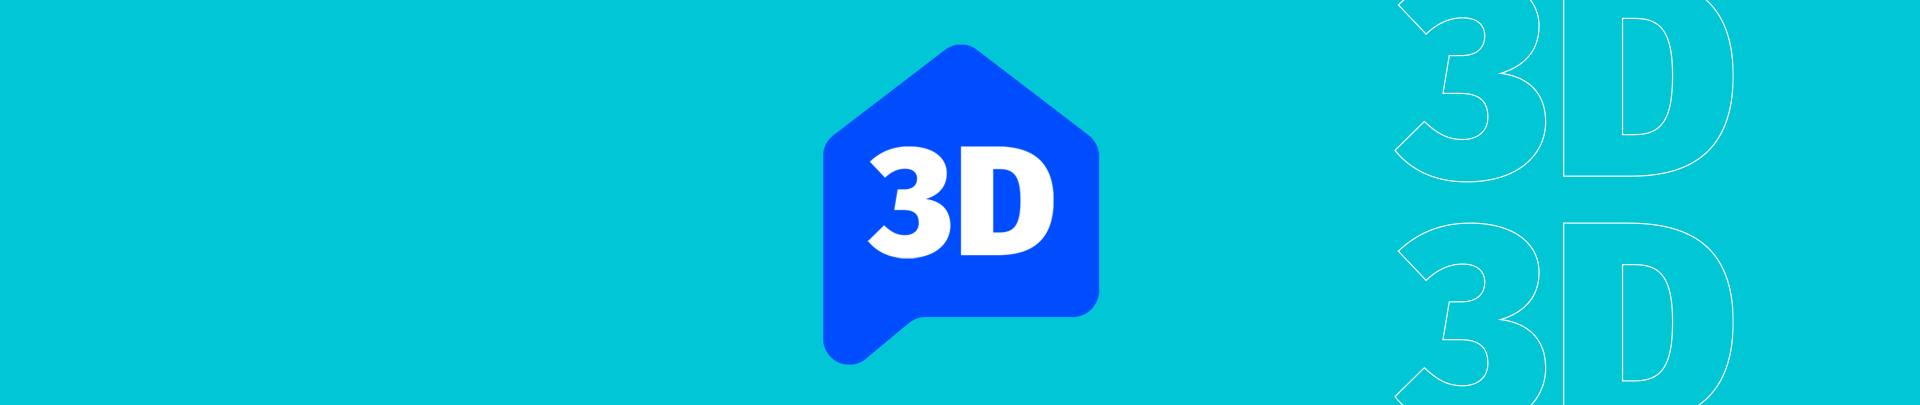 3D ფოტოგრაფია და უძრავი ქონება